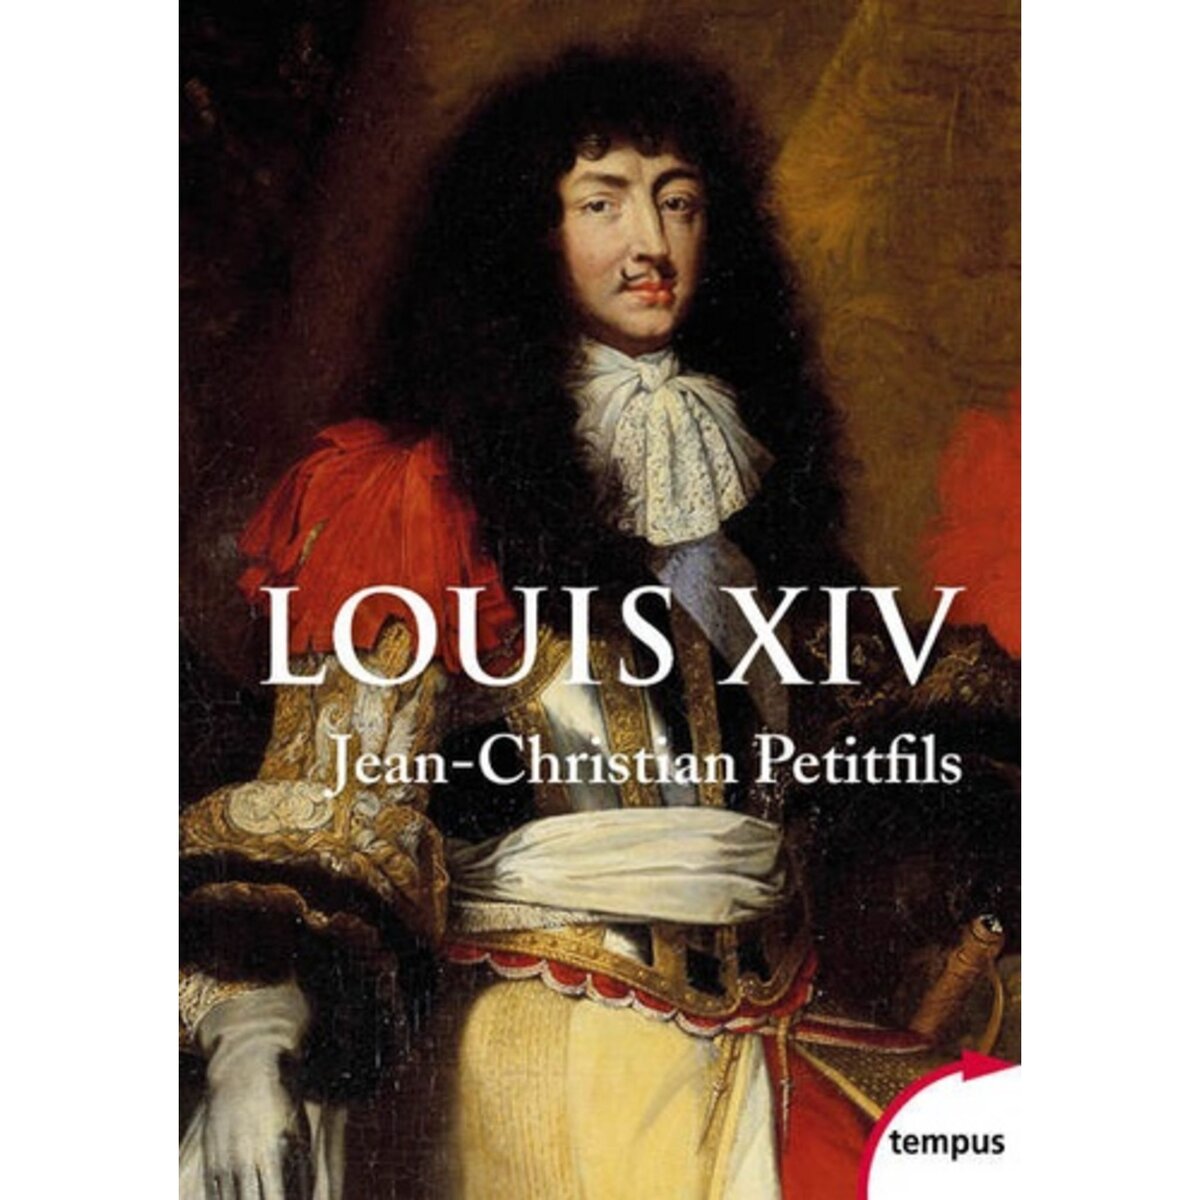  LOUIS XIV, Petitfils Jean-Christian